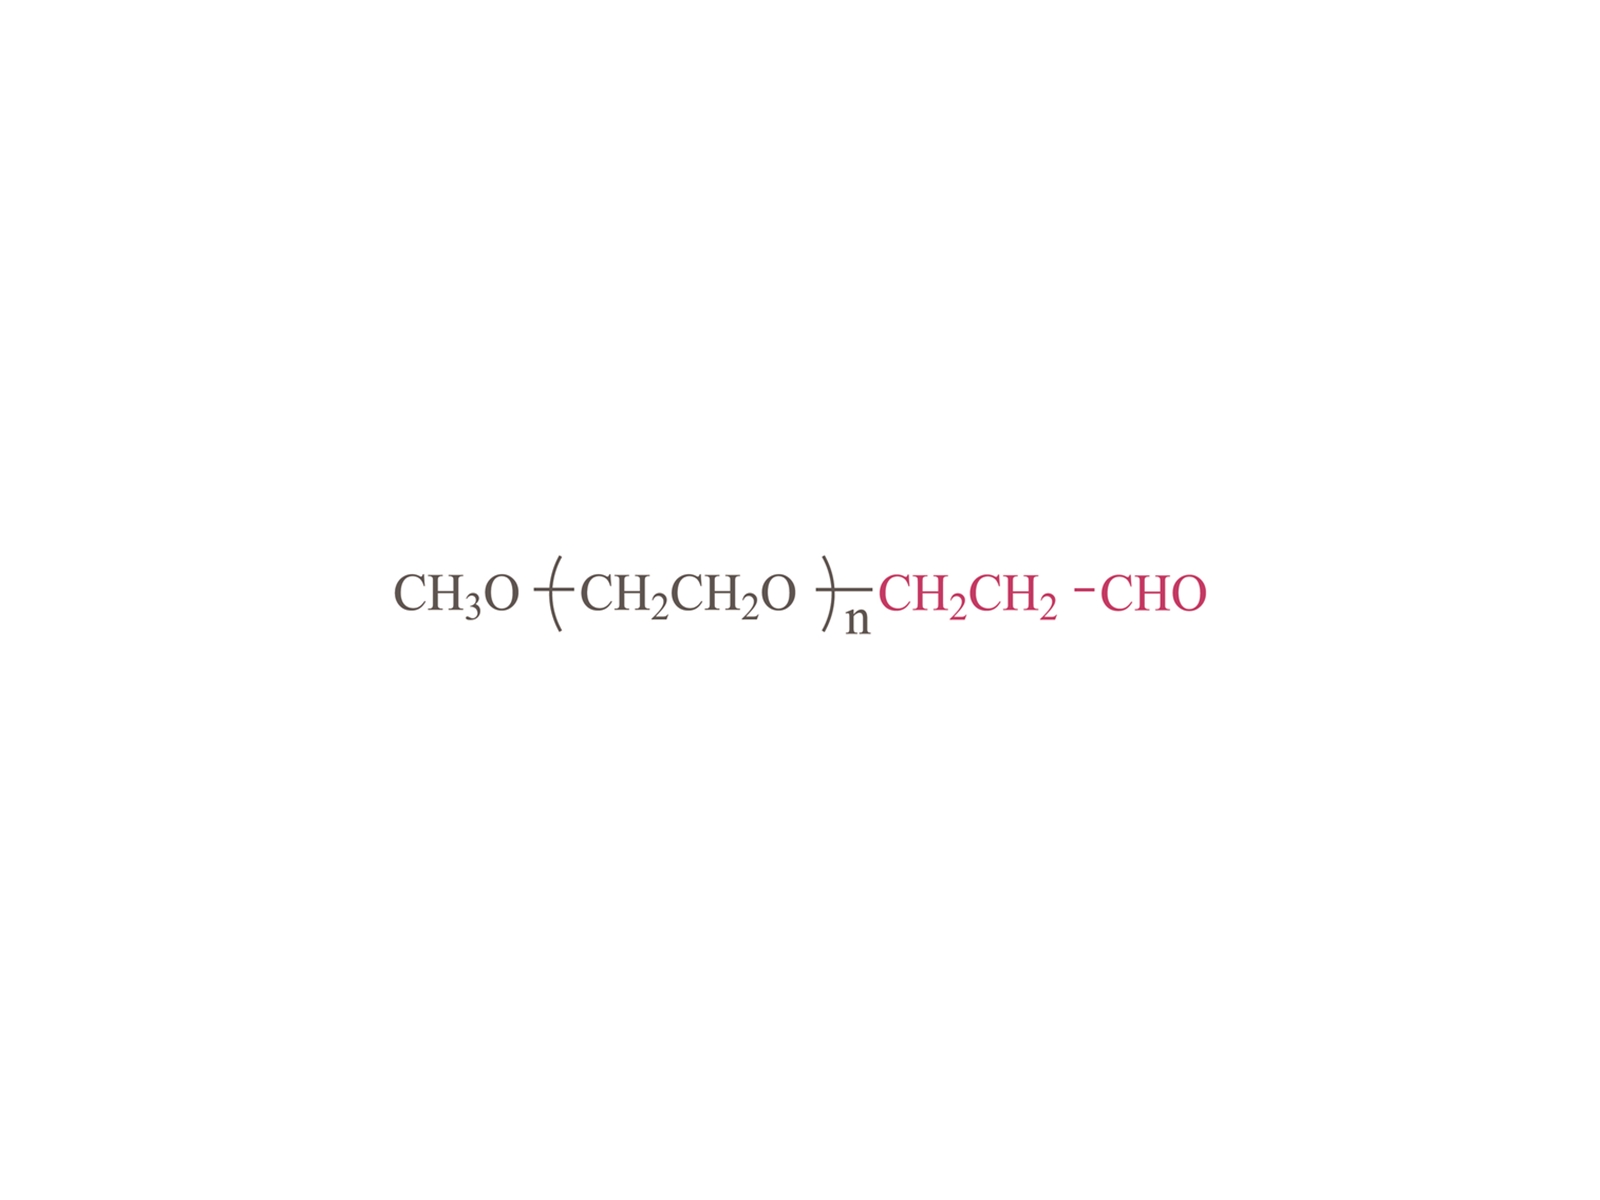 Methoxypoly (Ethylene Glycol) Propionaldehyde [MPEG-PALD] CAS: 125061-88-3